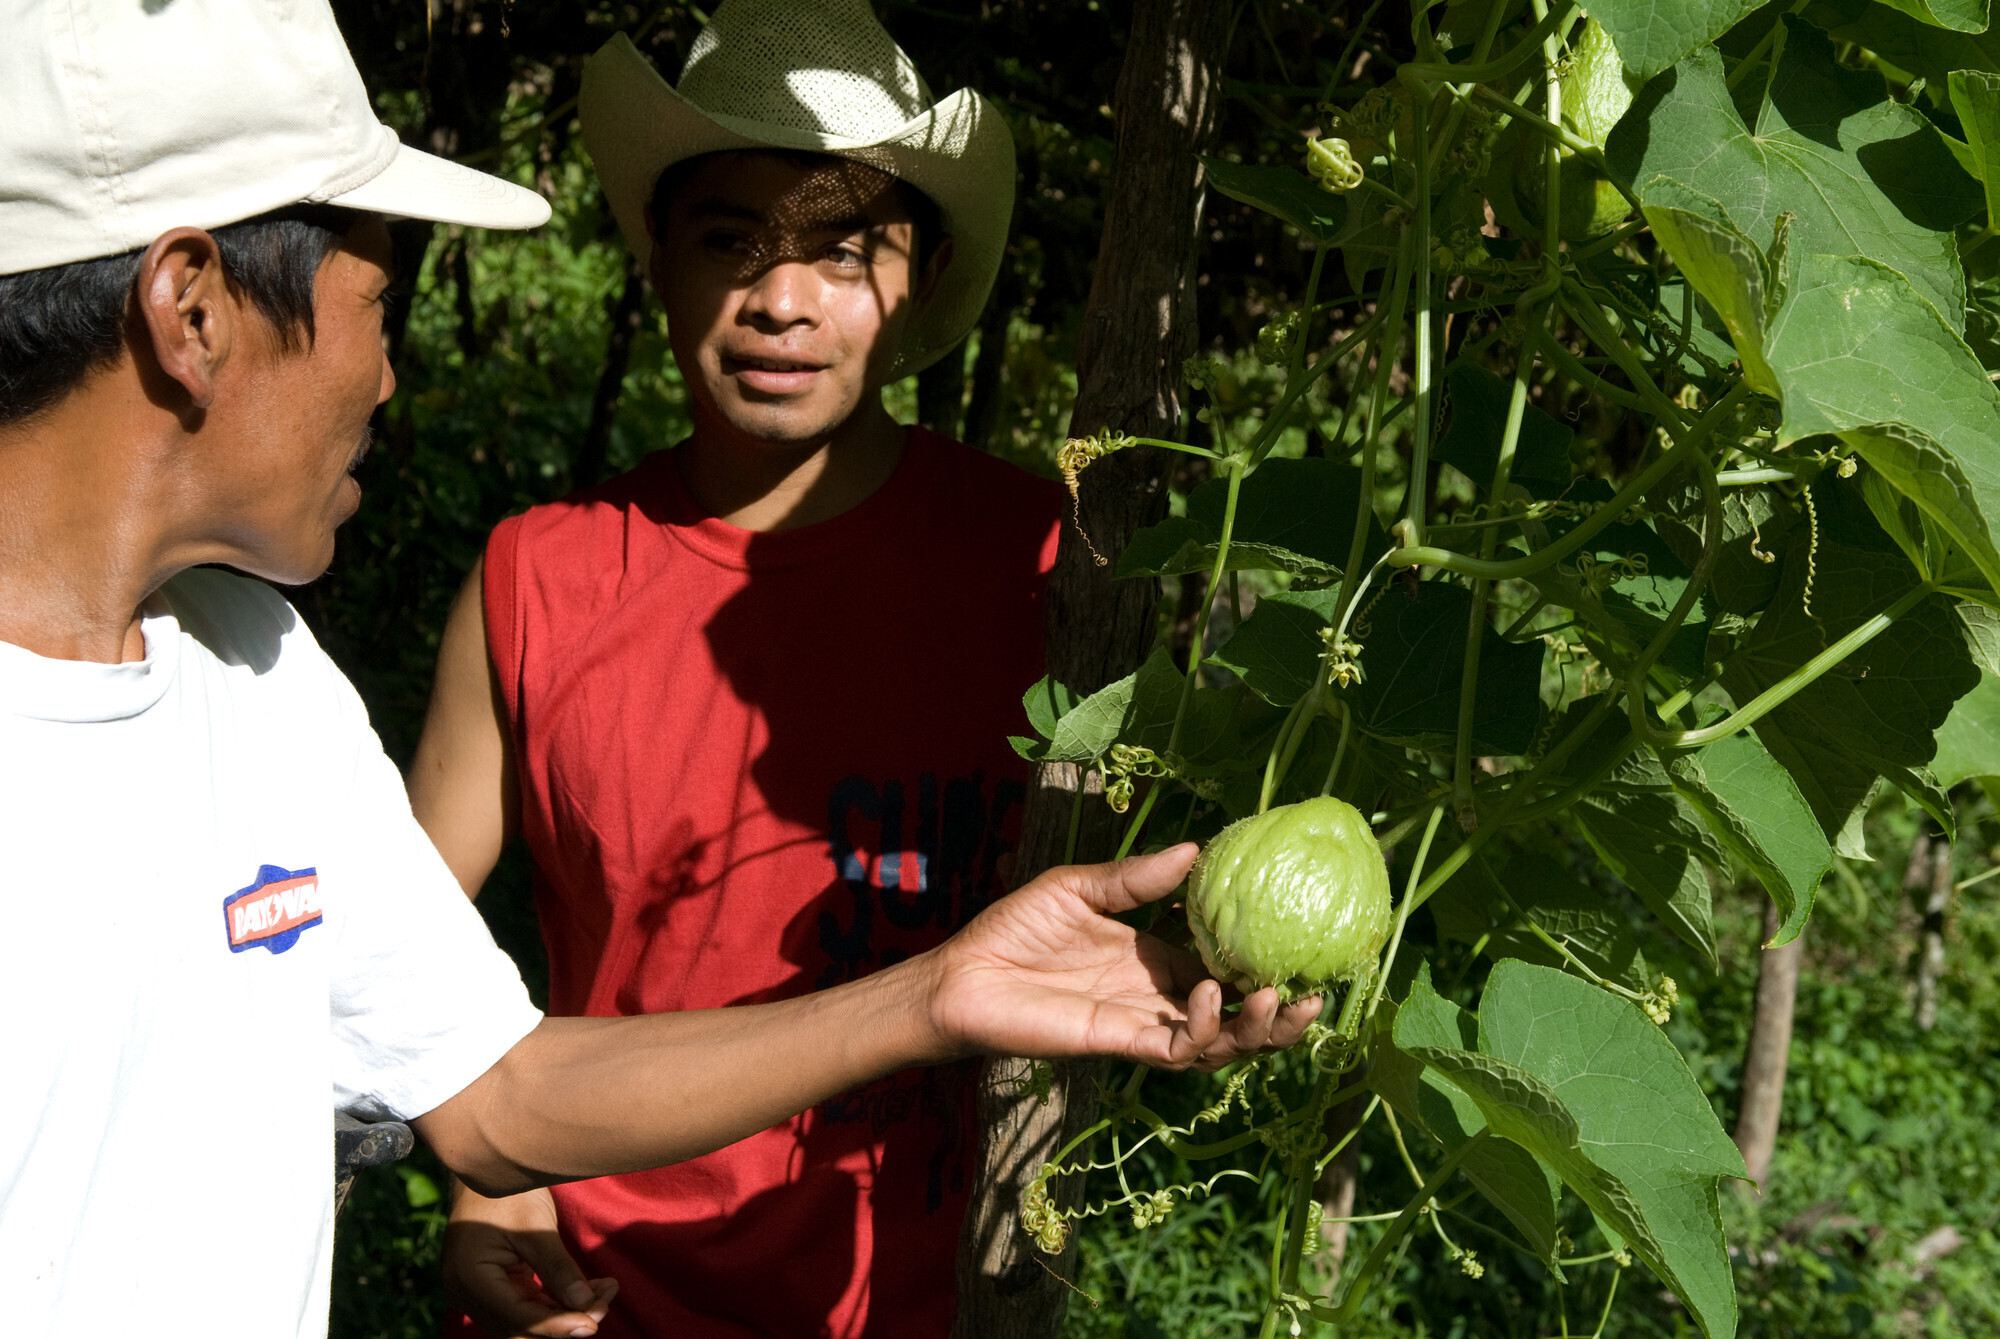 Two Guatemalan men examine a squash plant